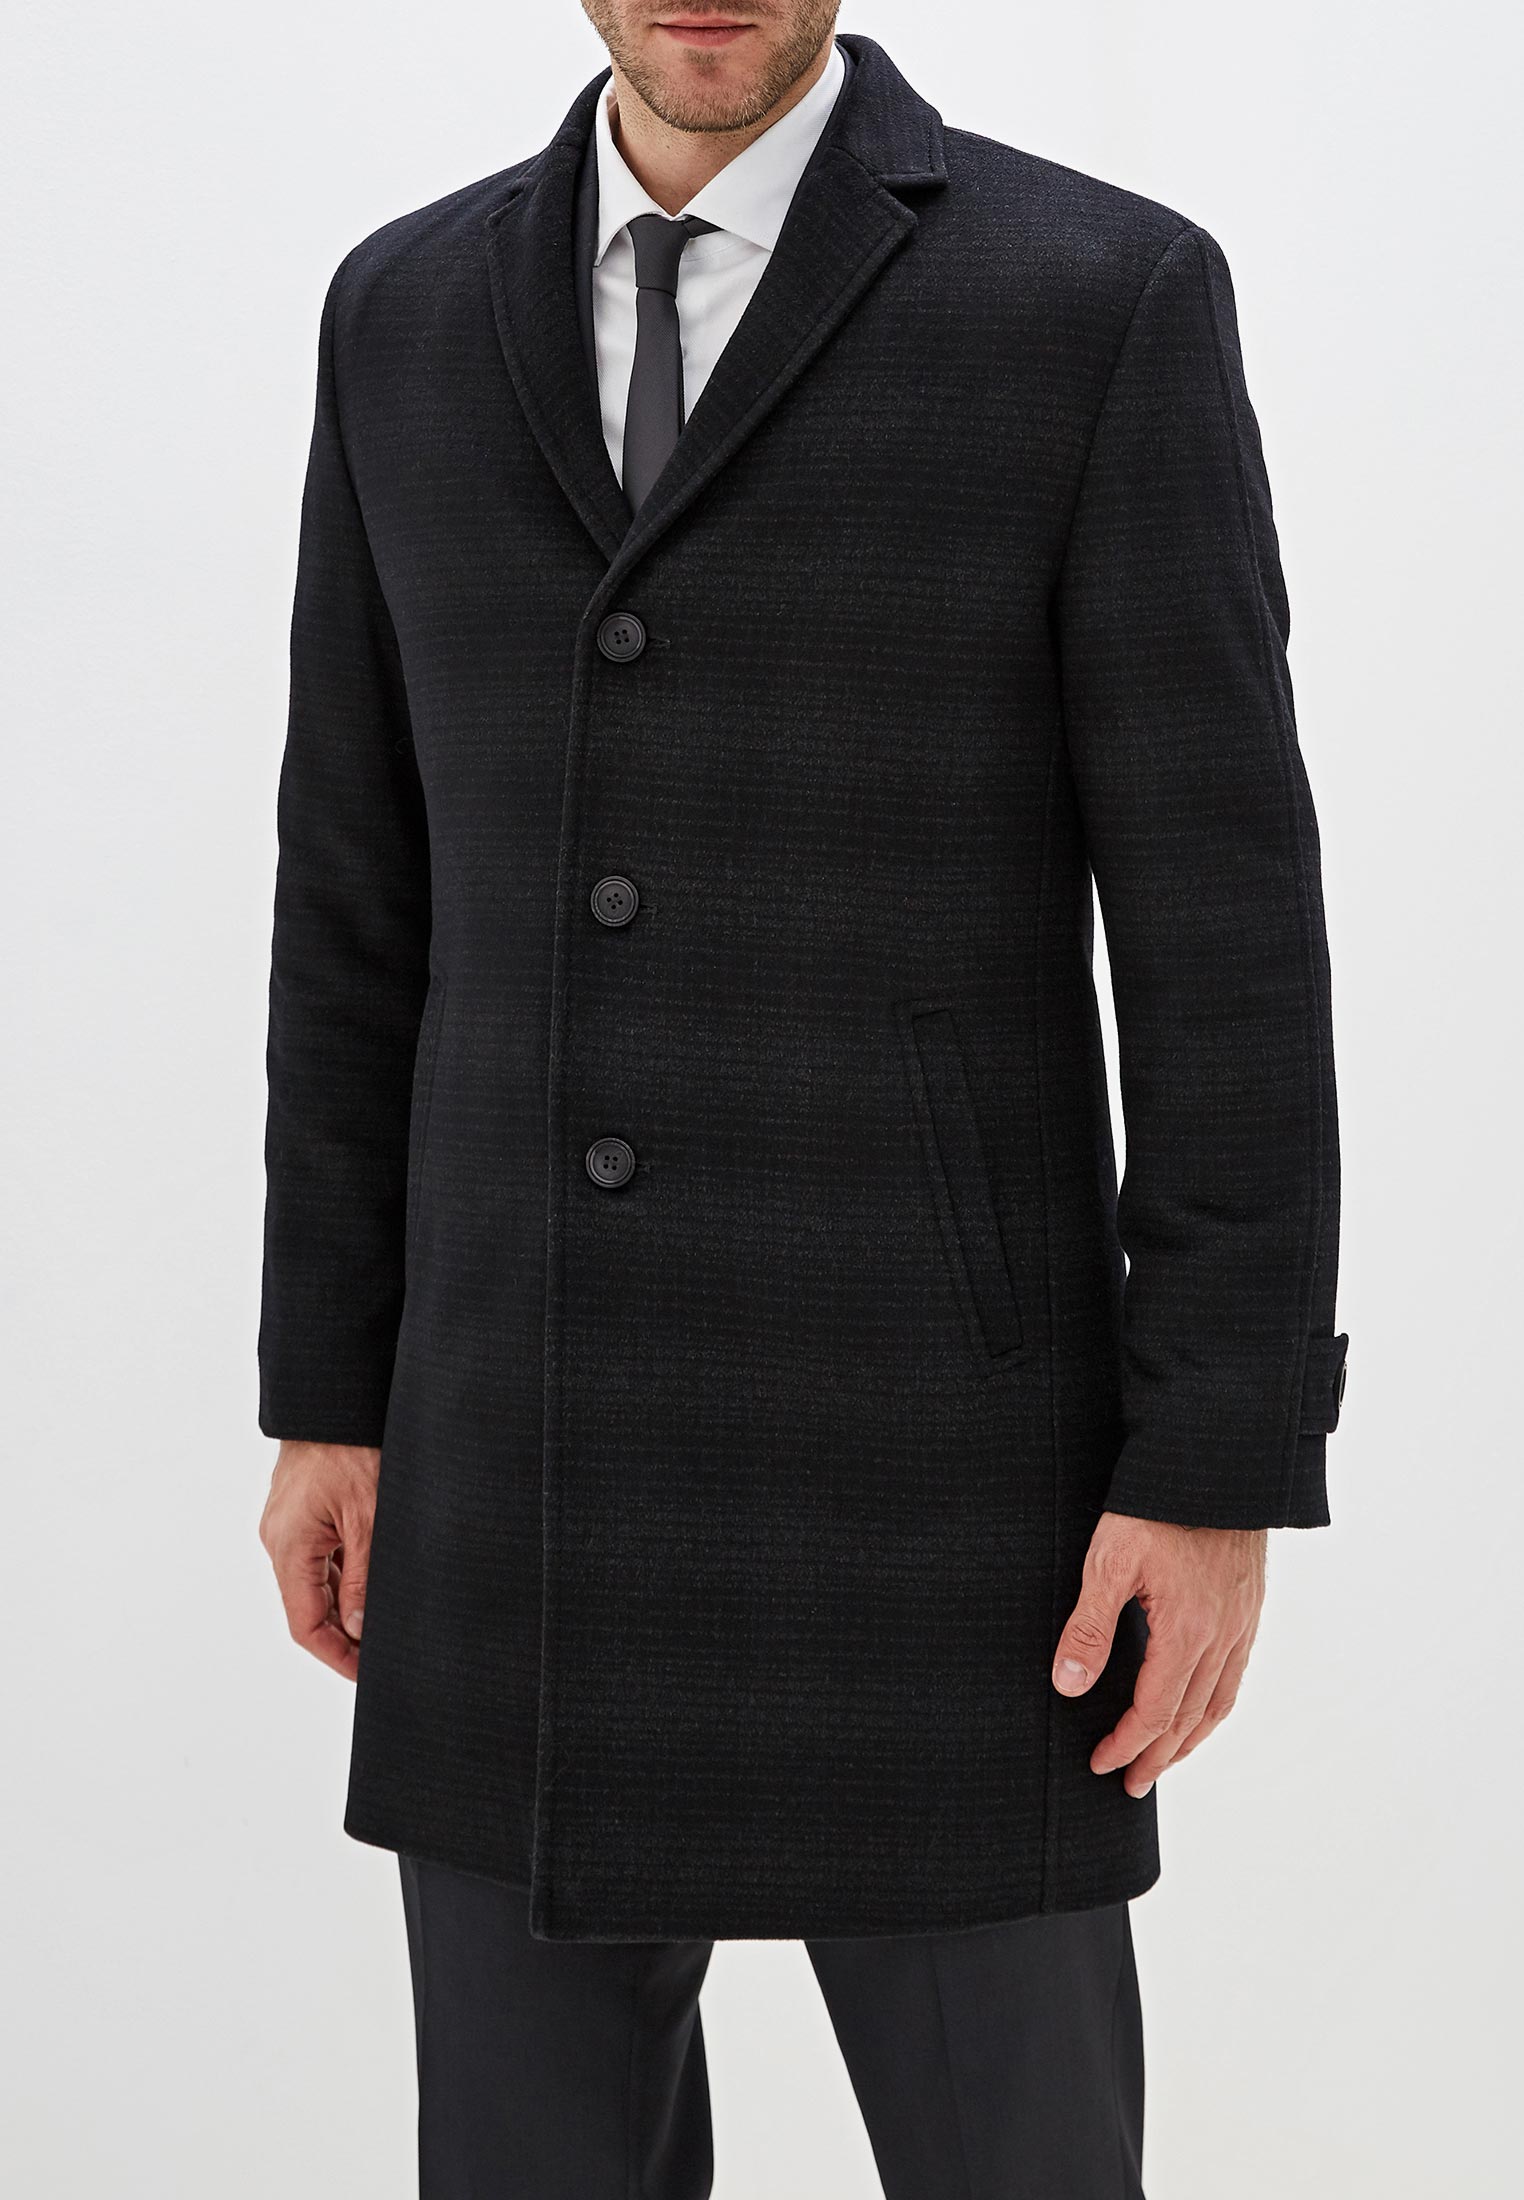 Пальто мужское сударь. Мужские пальто Абсолютекс. Пальто мужское ABSOLUTEX Exclusive модель 790кру. ABSOLUTEX пальто мужское. ABSOLUTEX Exclusive пальто мужское.